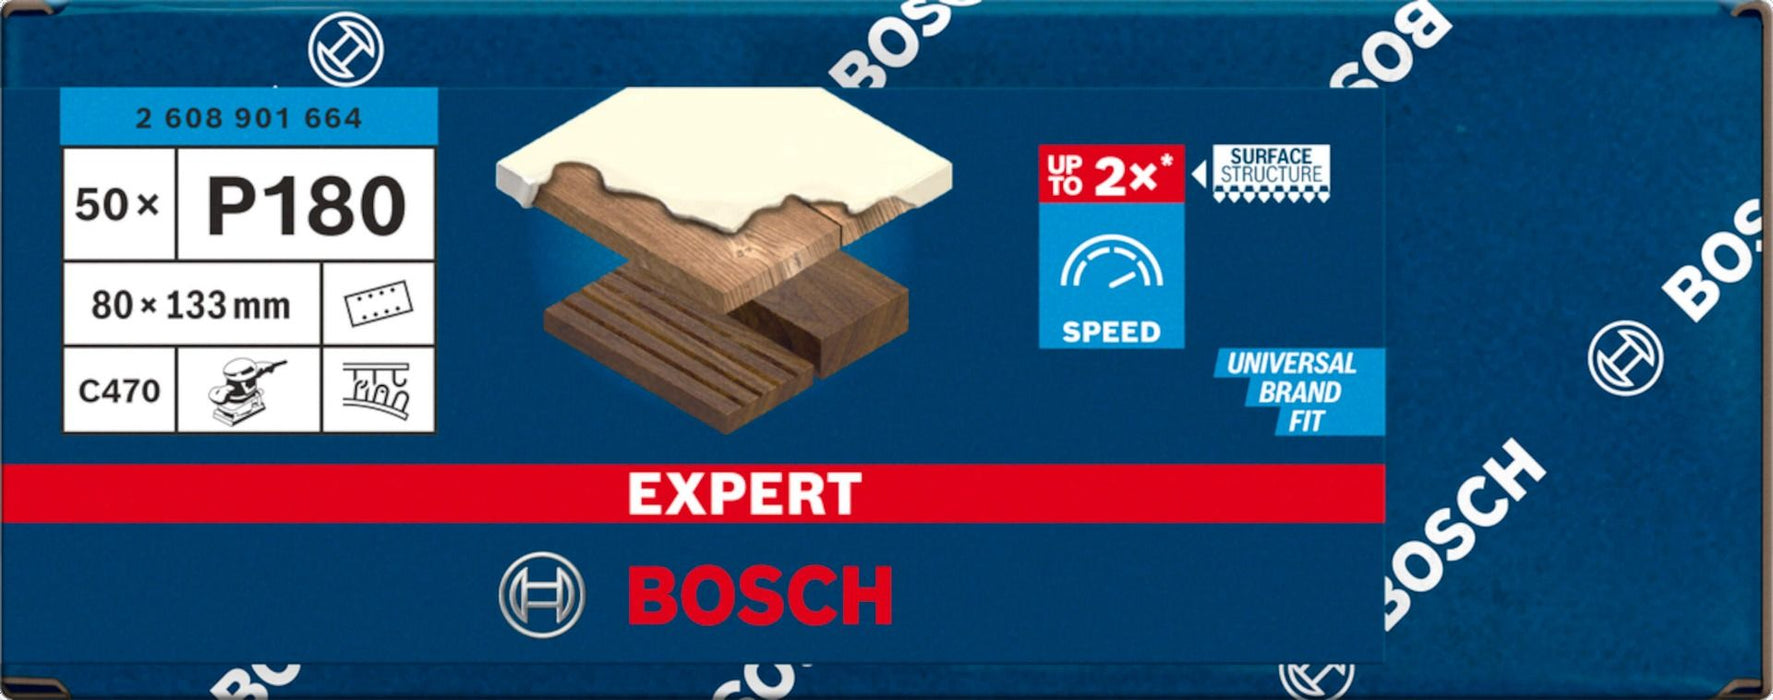 Bosch EXPERT list C470, 80 x 133mm granulacija 180; pakovanje od 50 komada (2608901664)